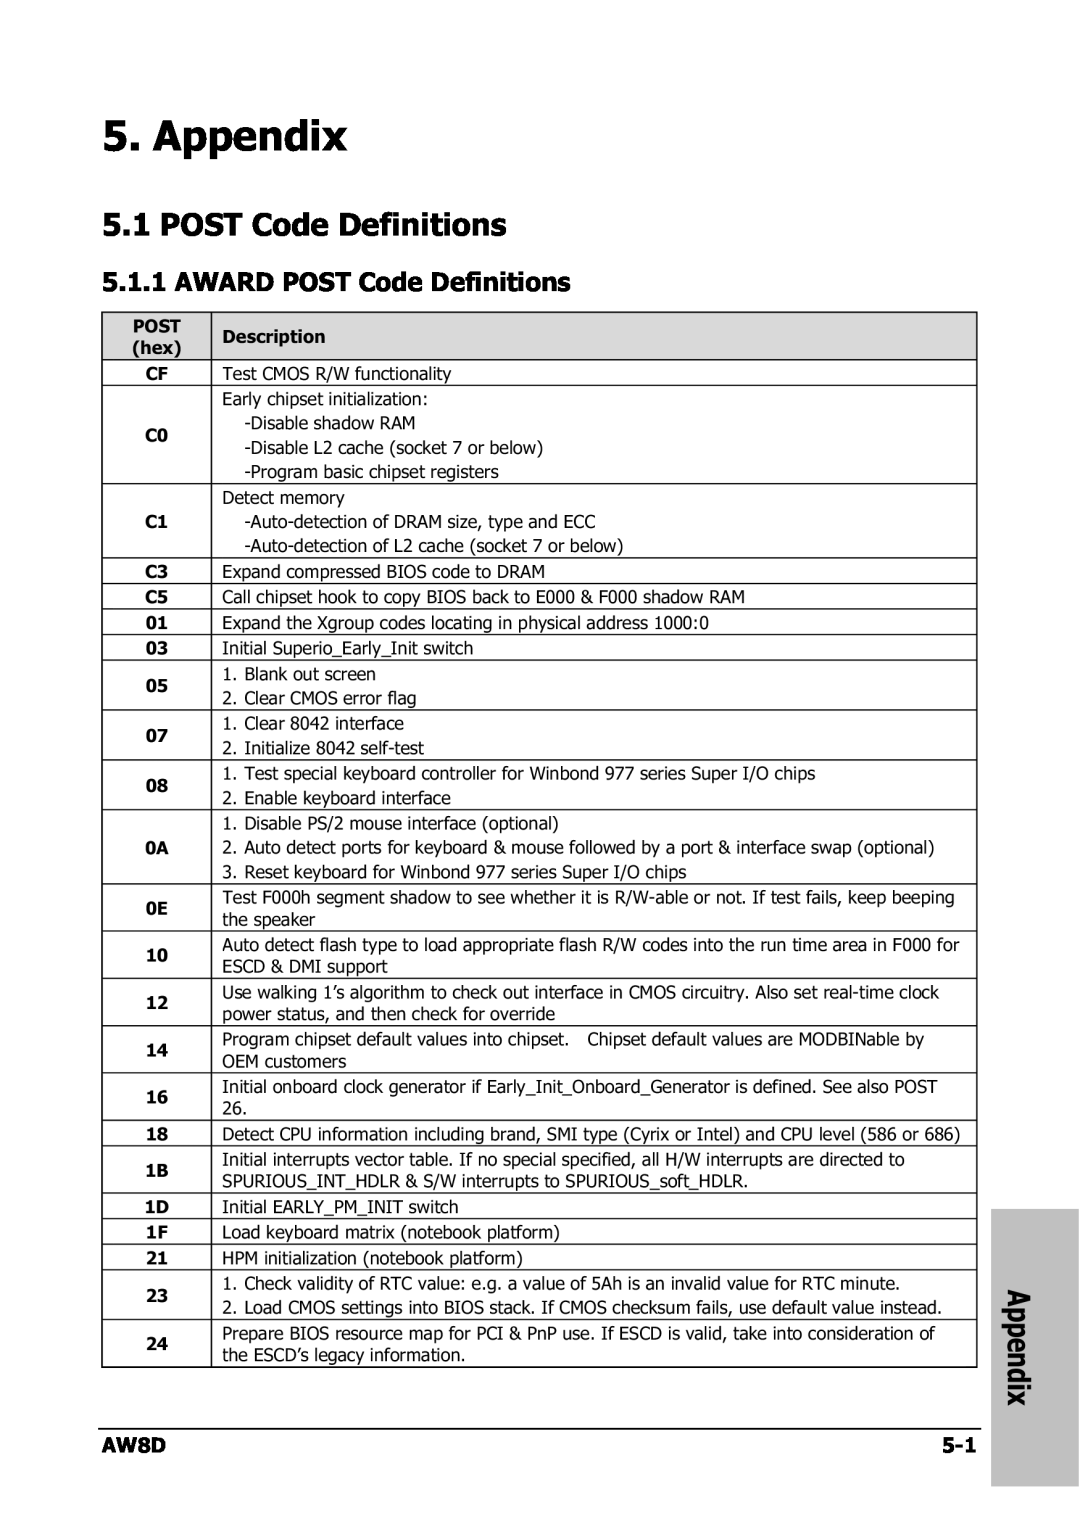 Intel AW8D user manual Appendix, AWARD POST Code Definitions 